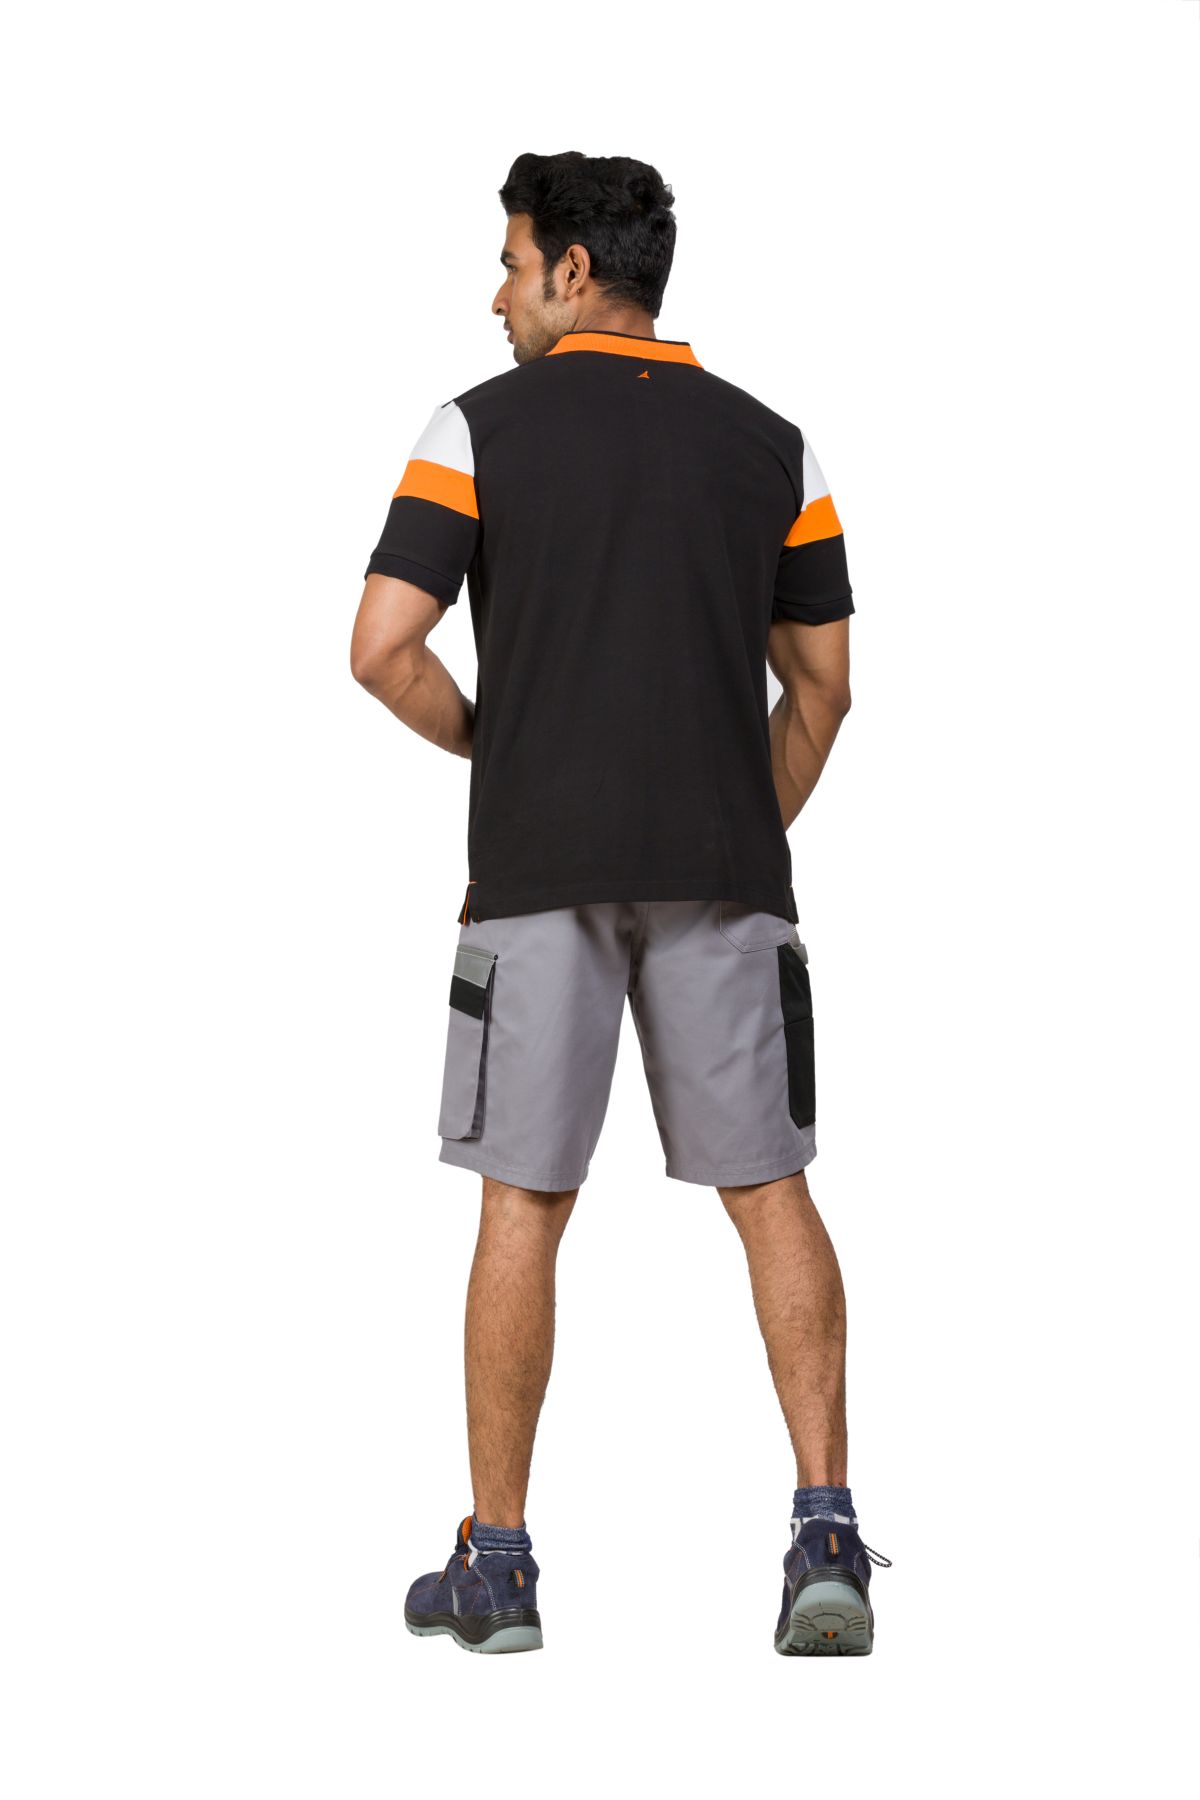 Cotton Blend Polo T-shirt Black-Orange-White for Men